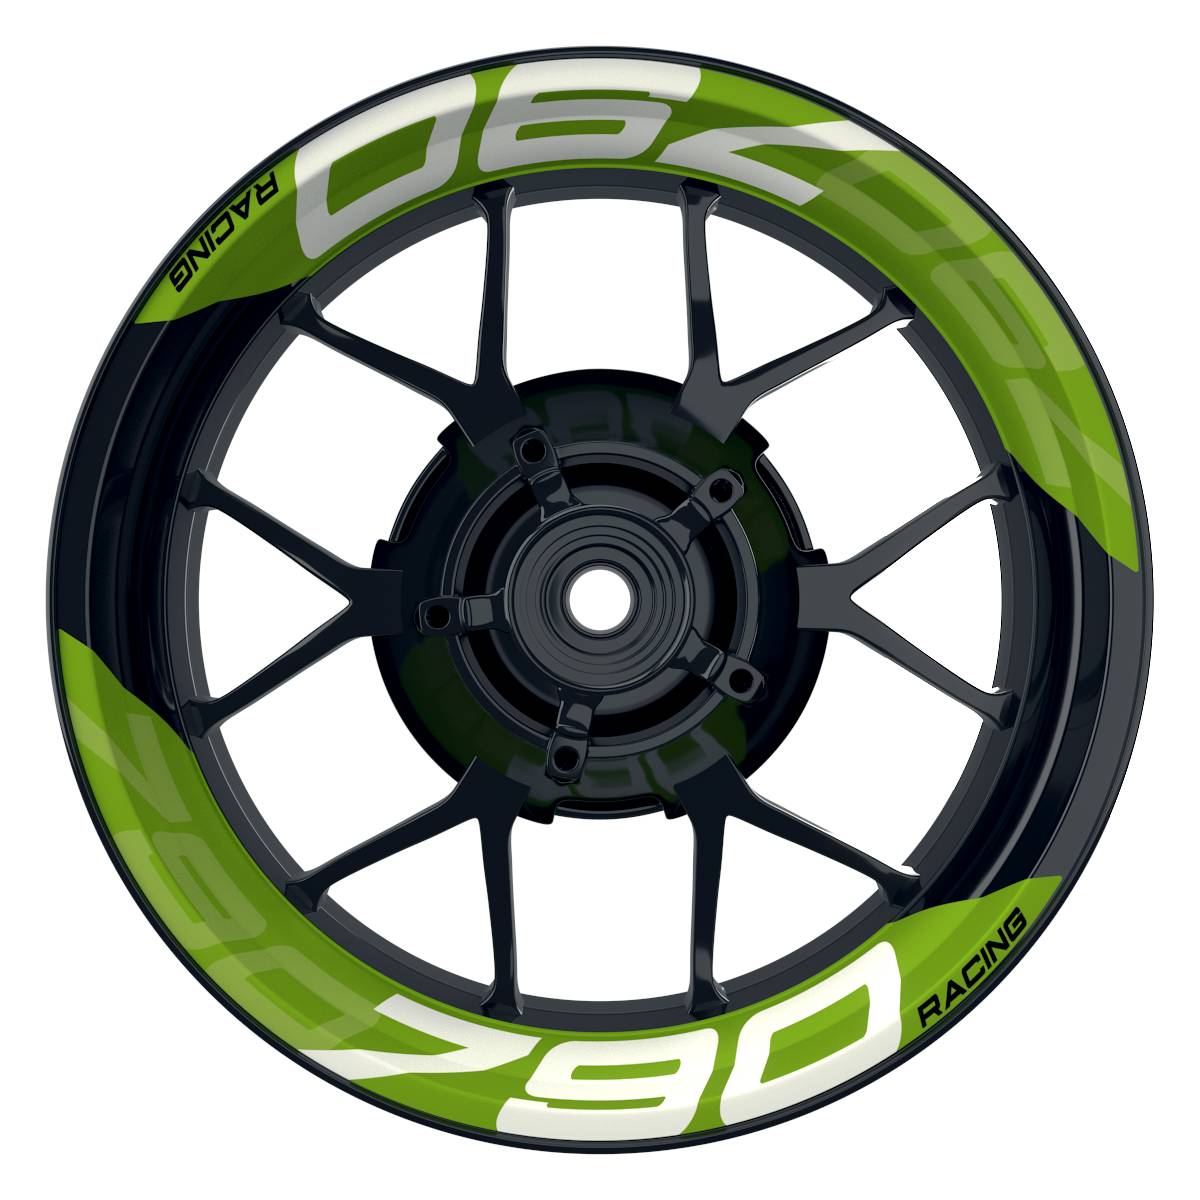 Wheelsticker Felgenaufkleber KTM Racing 790 einfarbig V2 gruen Frontansicht